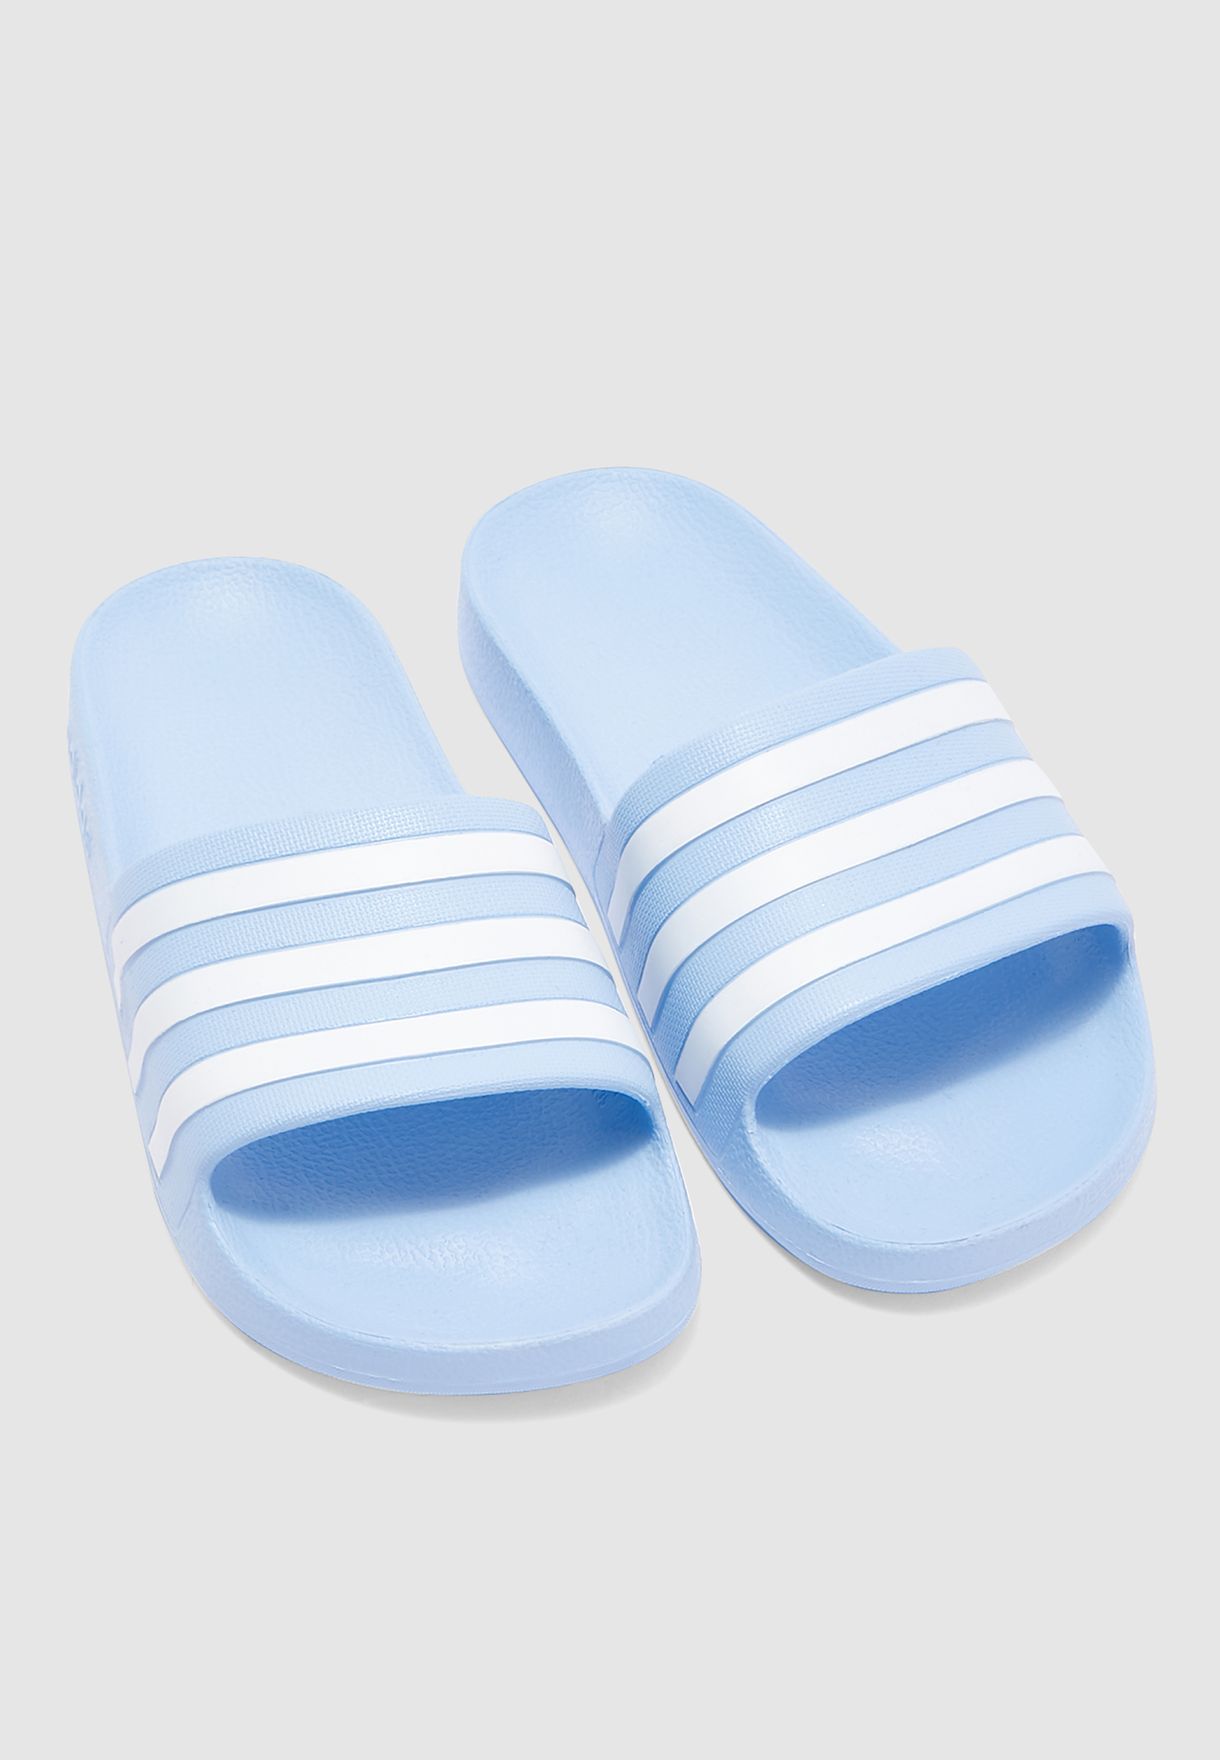 adidas adilette aqua blue